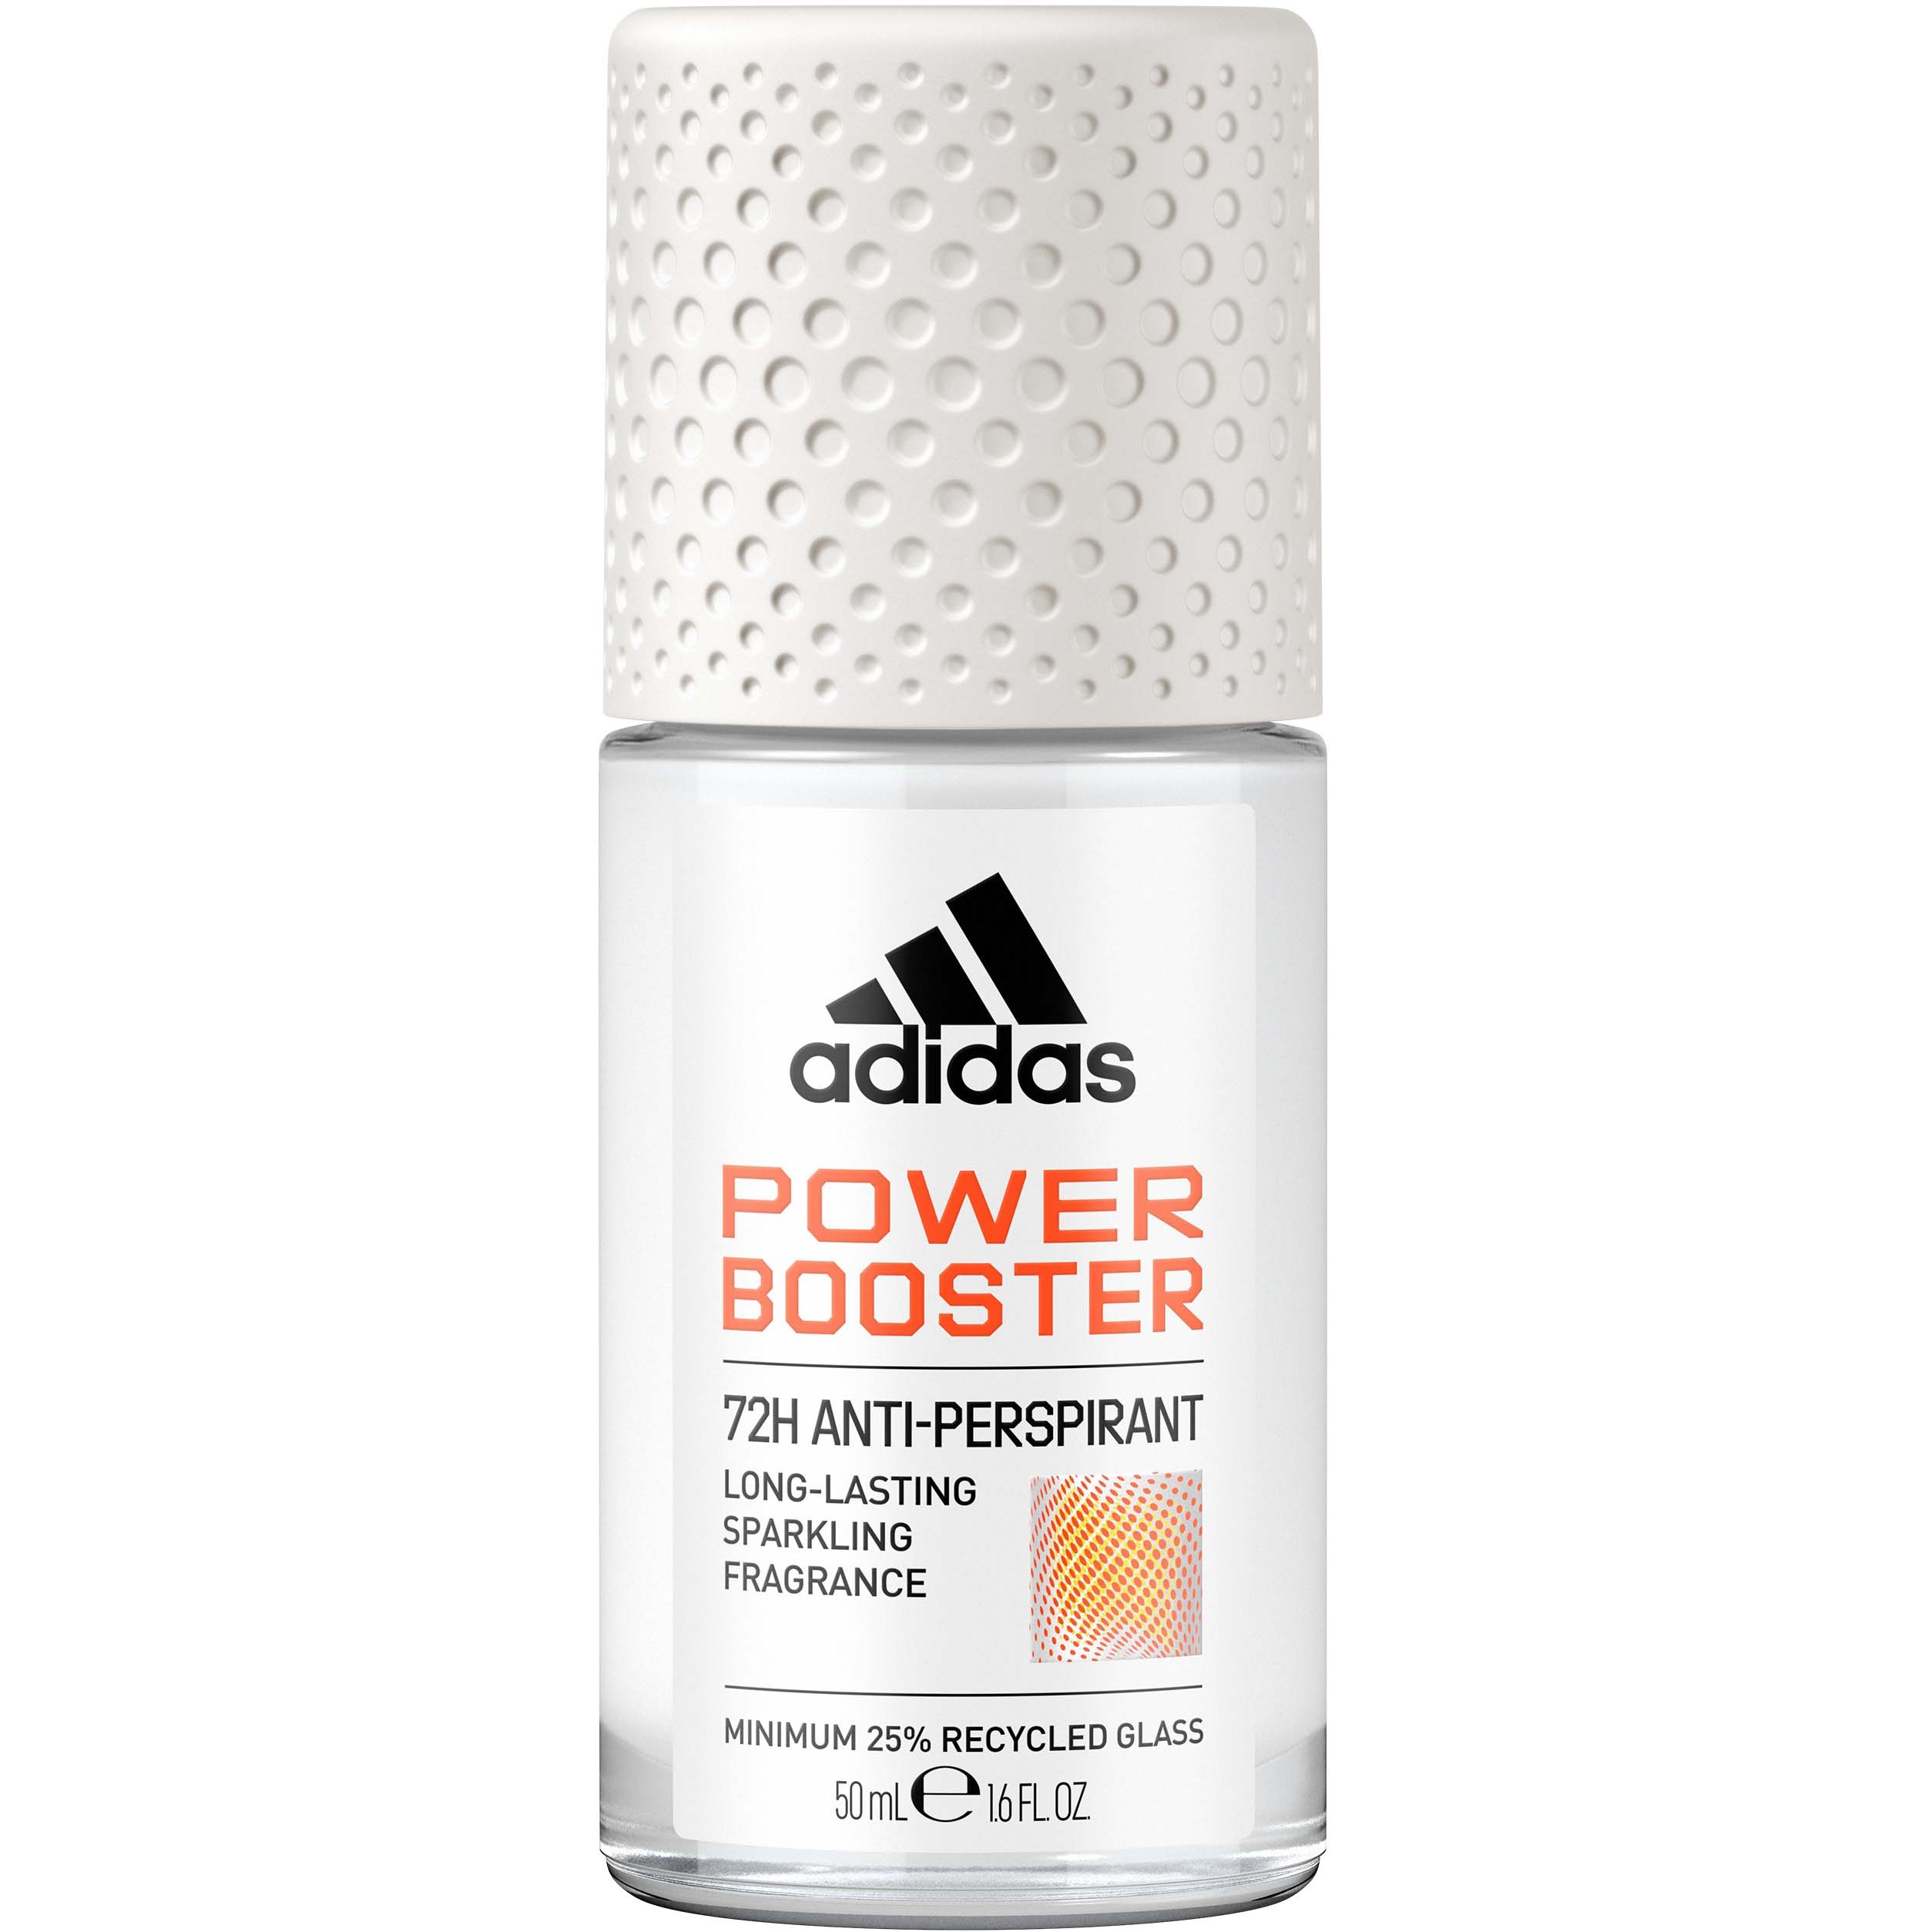 Zdjęcia - Dezodorant Adidas Power Booster 72H Anti-Perspirant 50 ml 